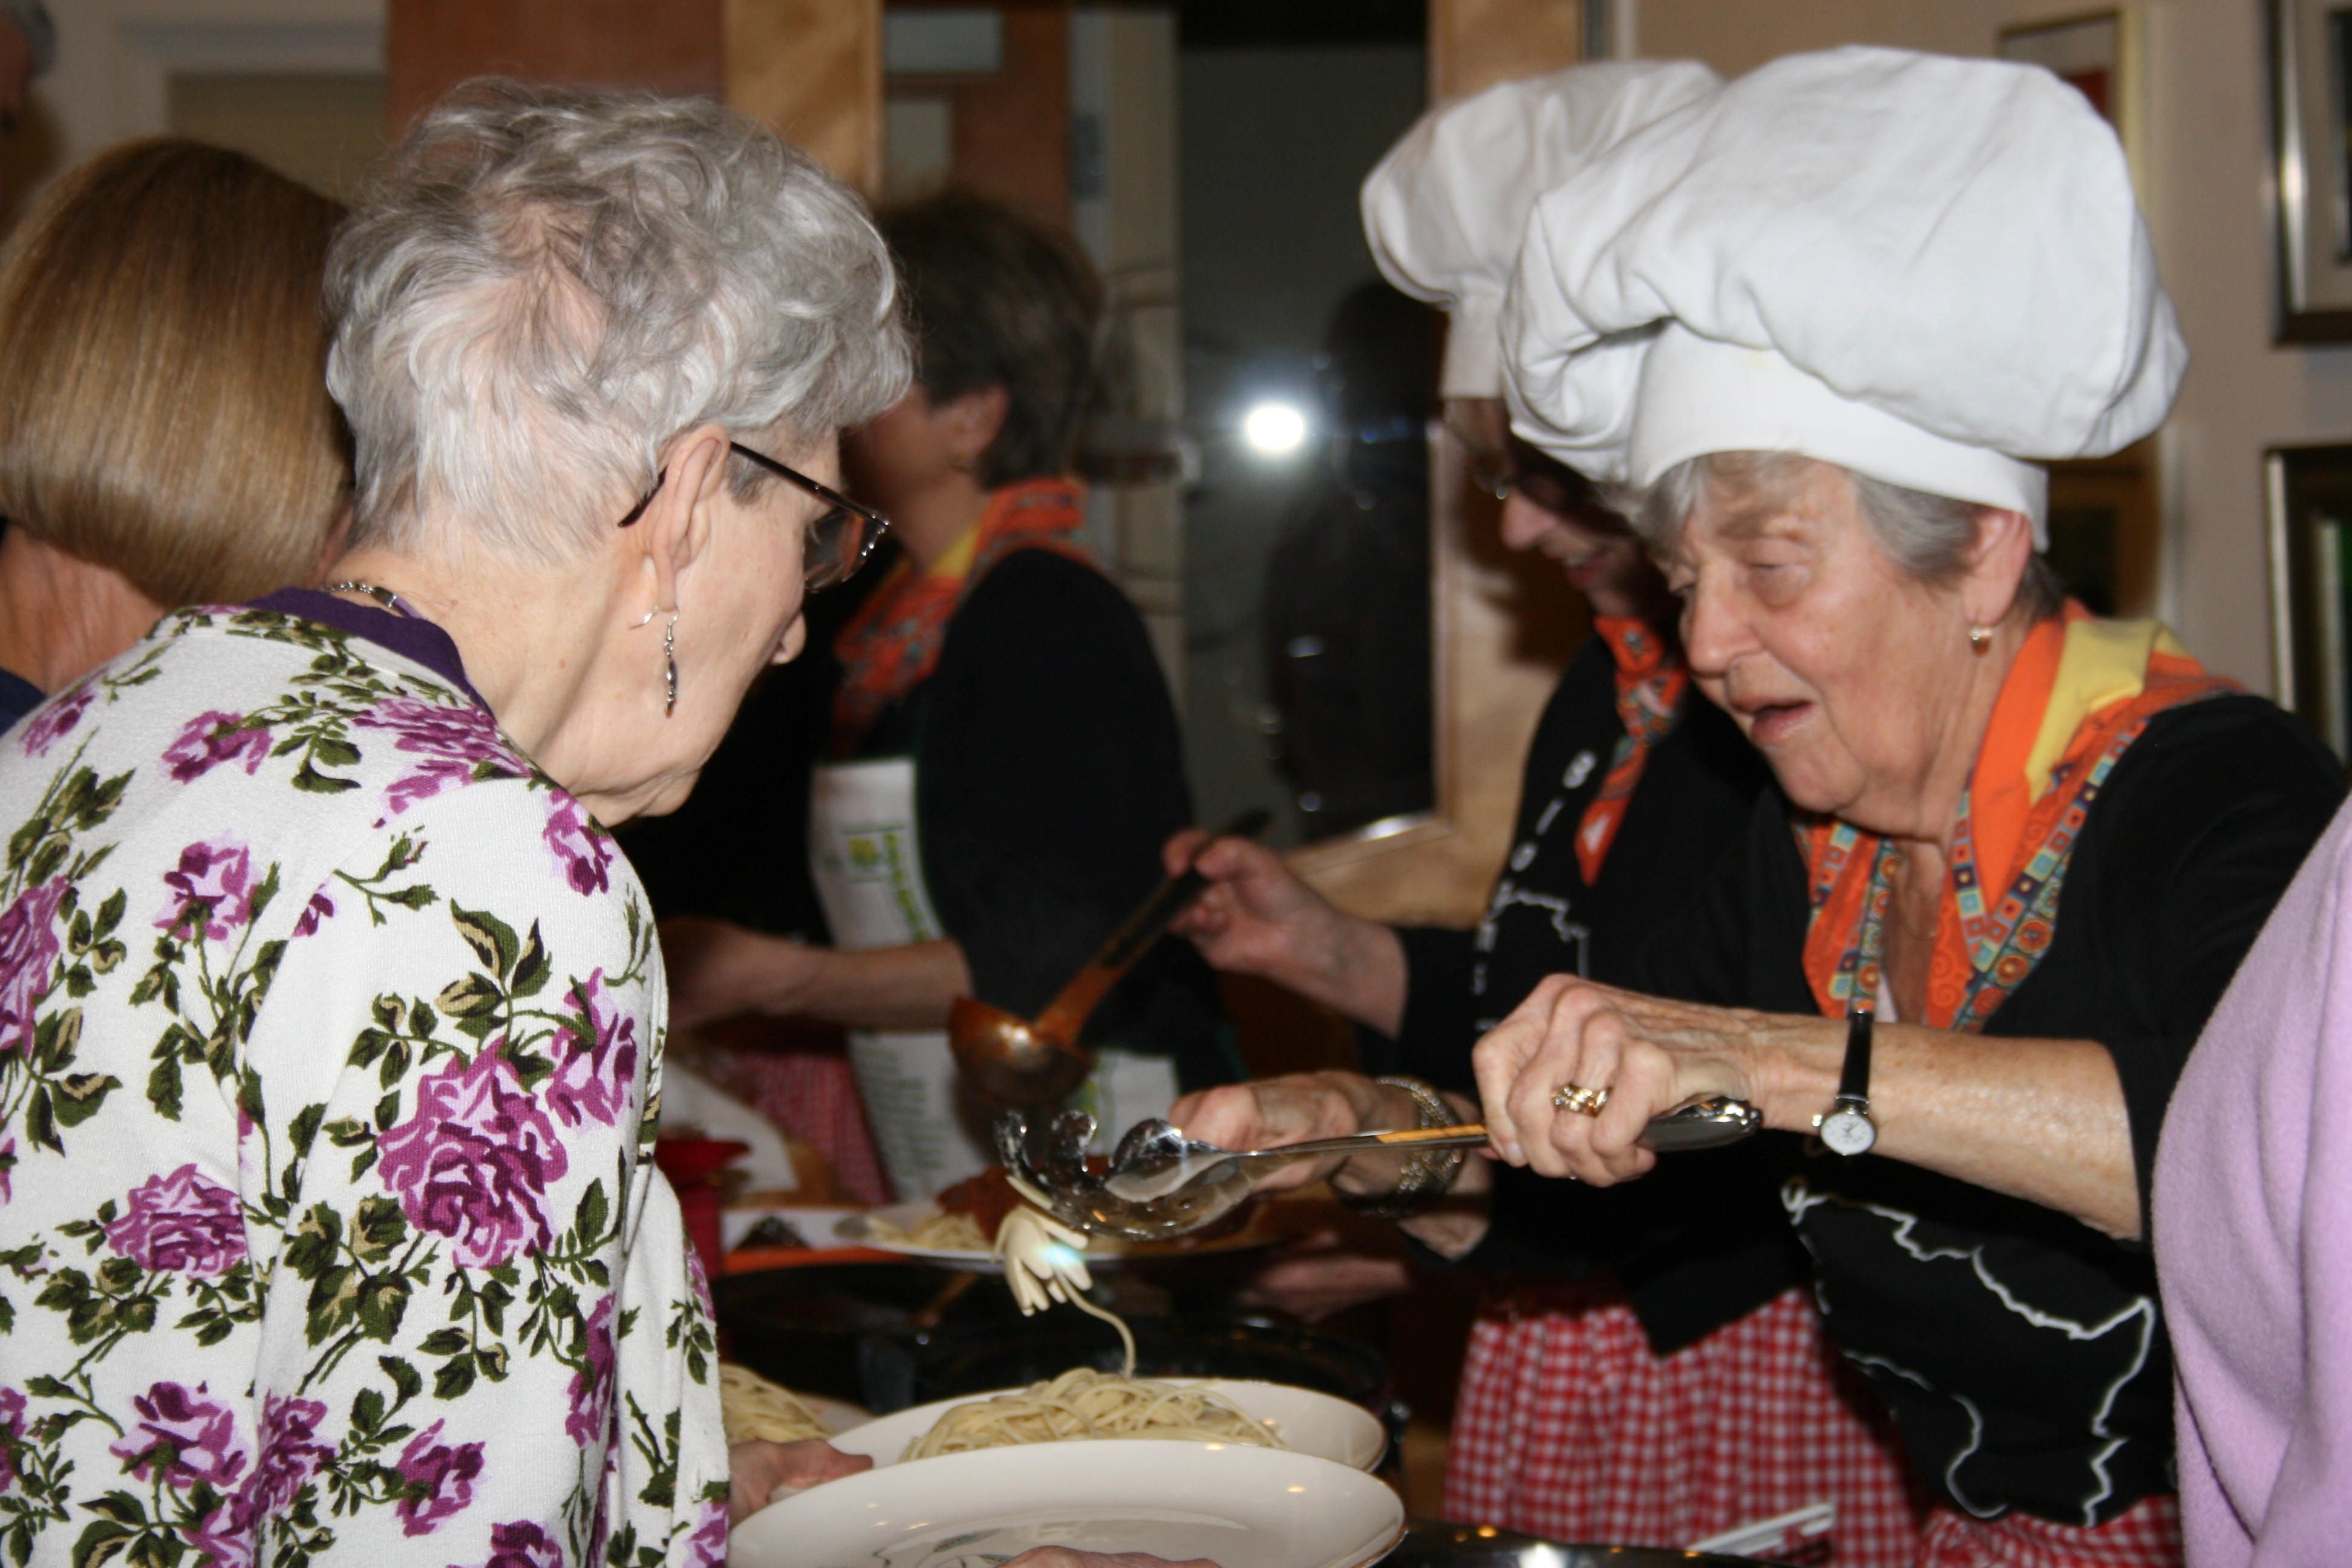 grandmothers serving pasta